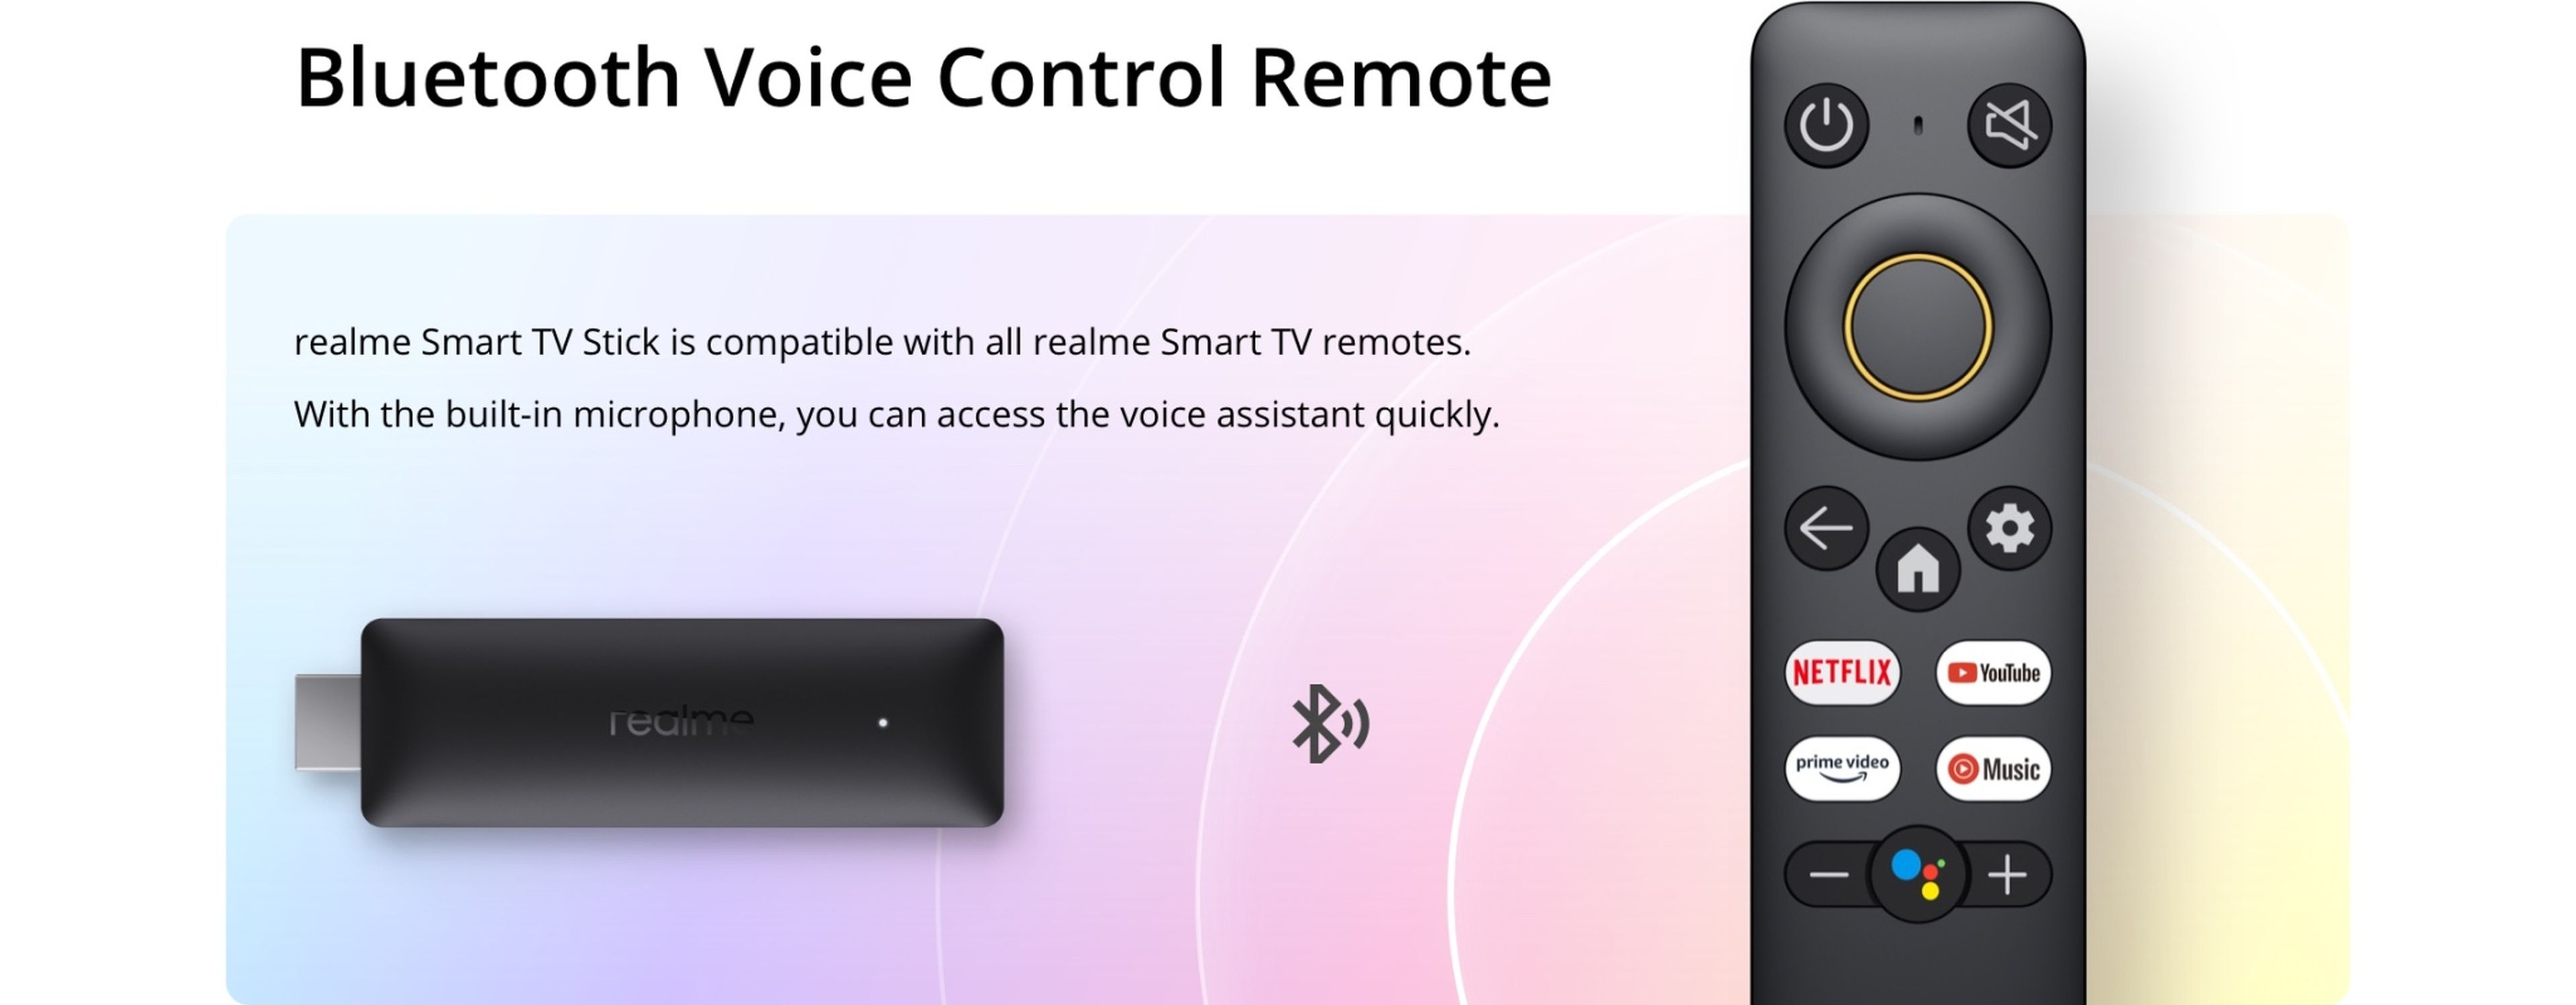 El realme 4K Smart Google TV Stick apunta a destronar al Chromecast con Google TV